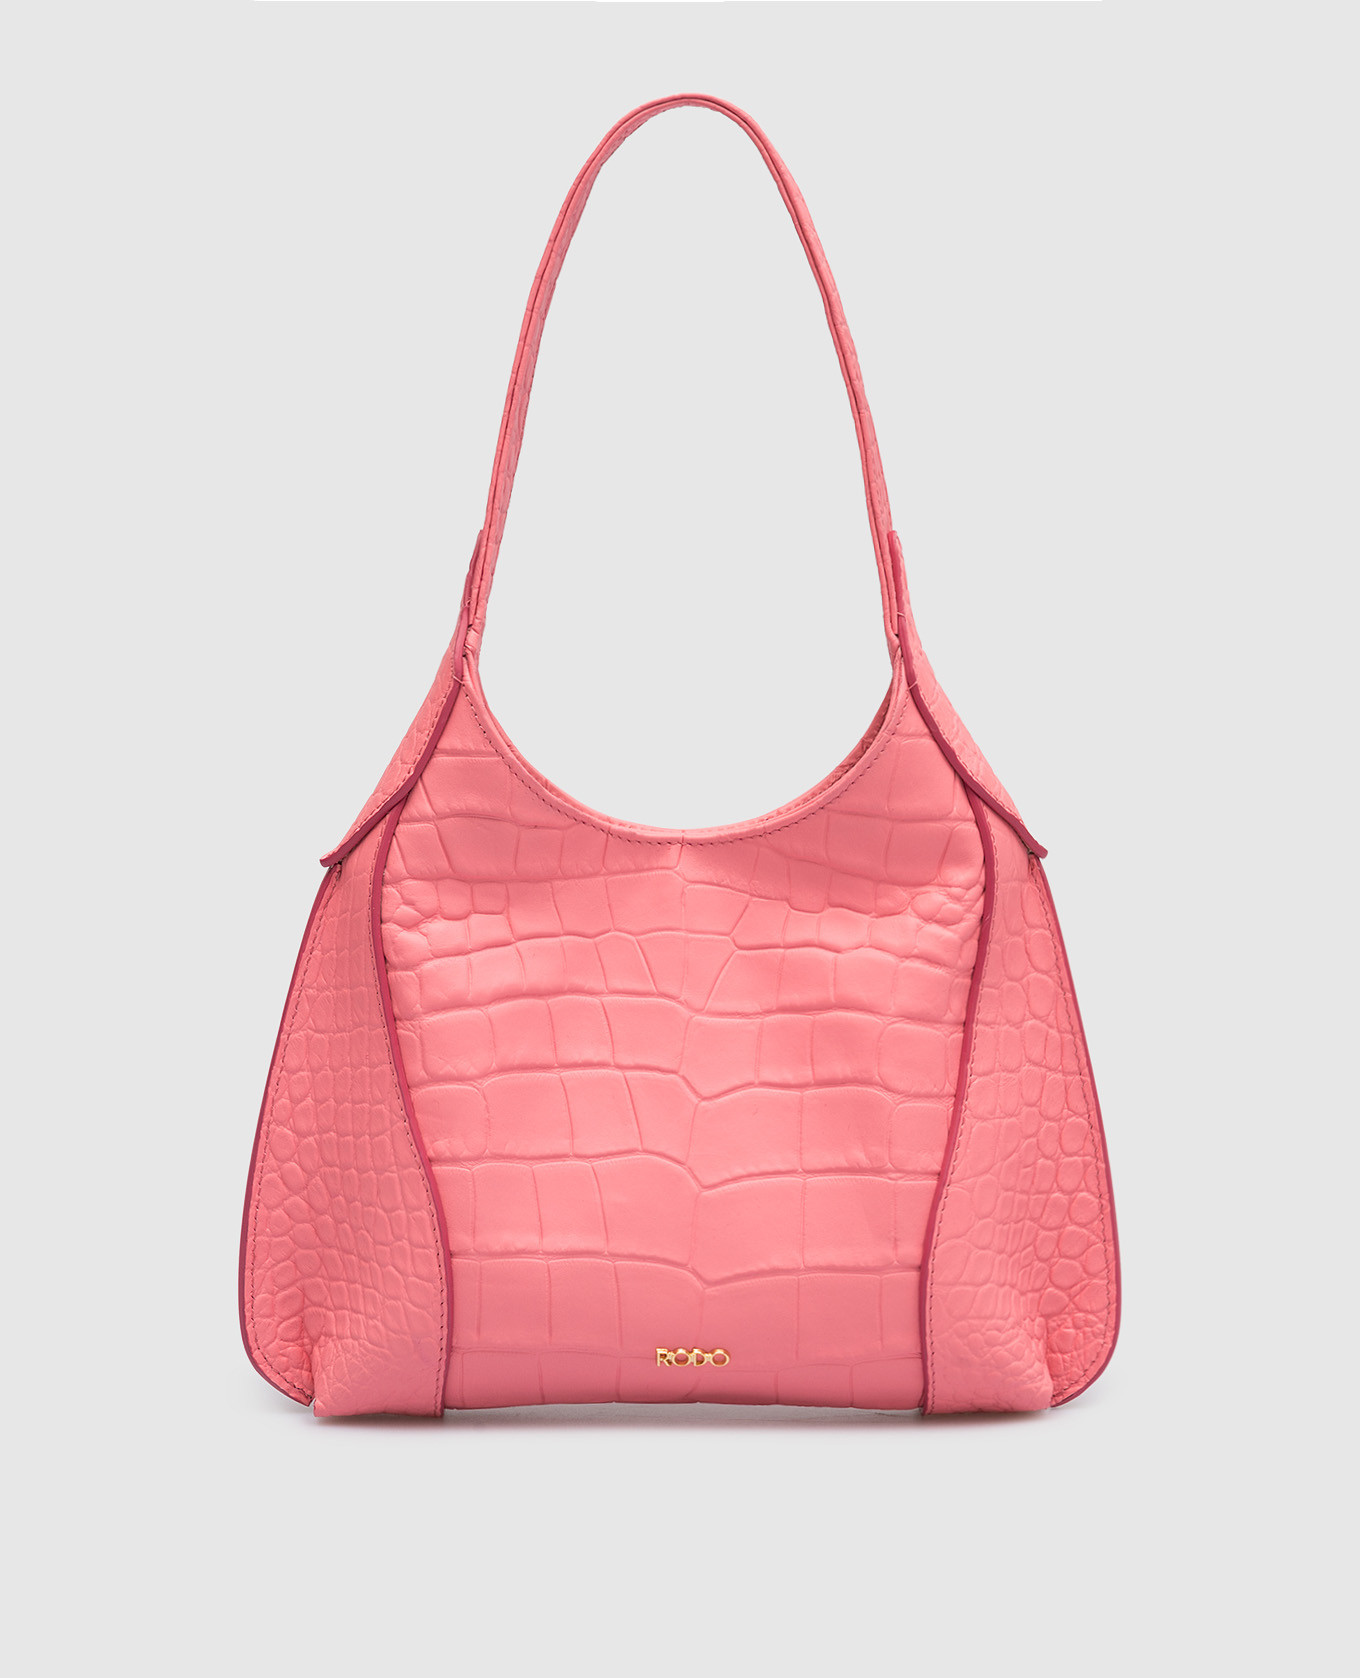 Pink leather hobo bag ASMARA